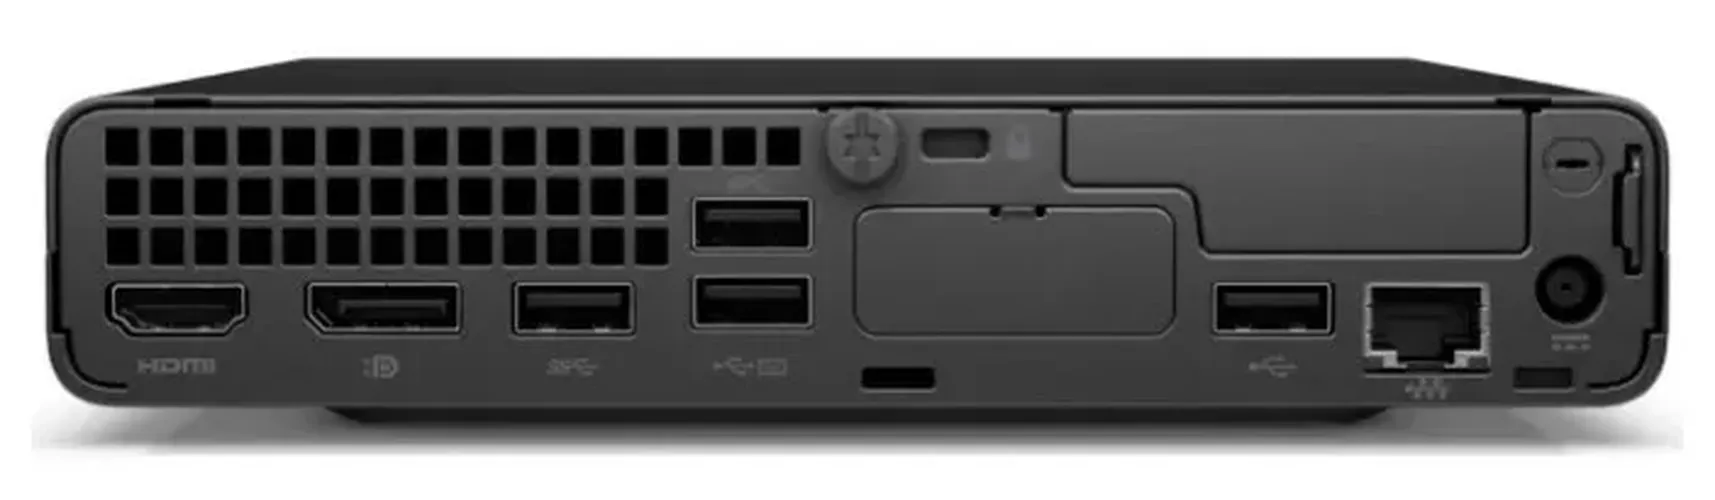 Мини ПК HP  PRODESK 400 G6 |i3-10100| 8Gb DDR4| SSD 256Gb, Черный, в Узбекистане